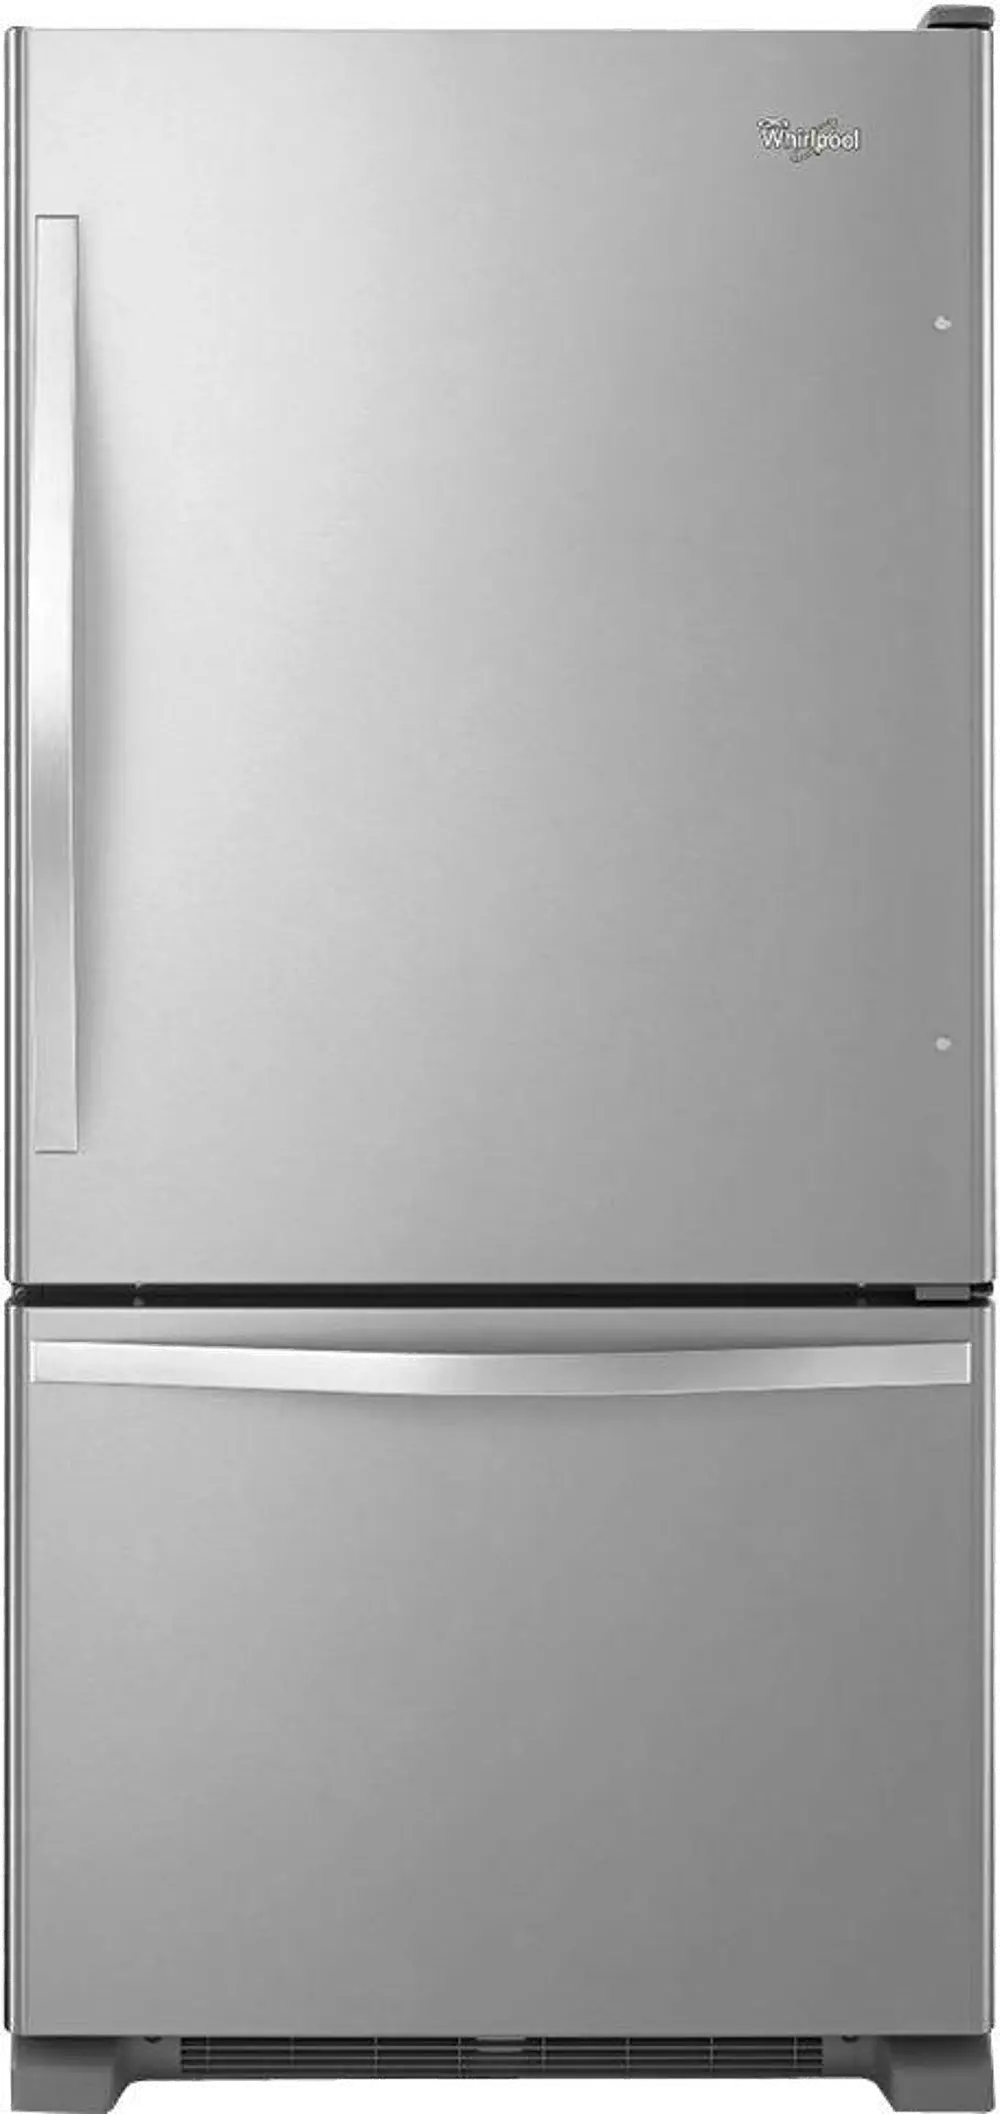 WRB322DMBM Whirlpool 22 cu ft Bottom Freezer Refrigerator - 33 W Stainless Steel-1